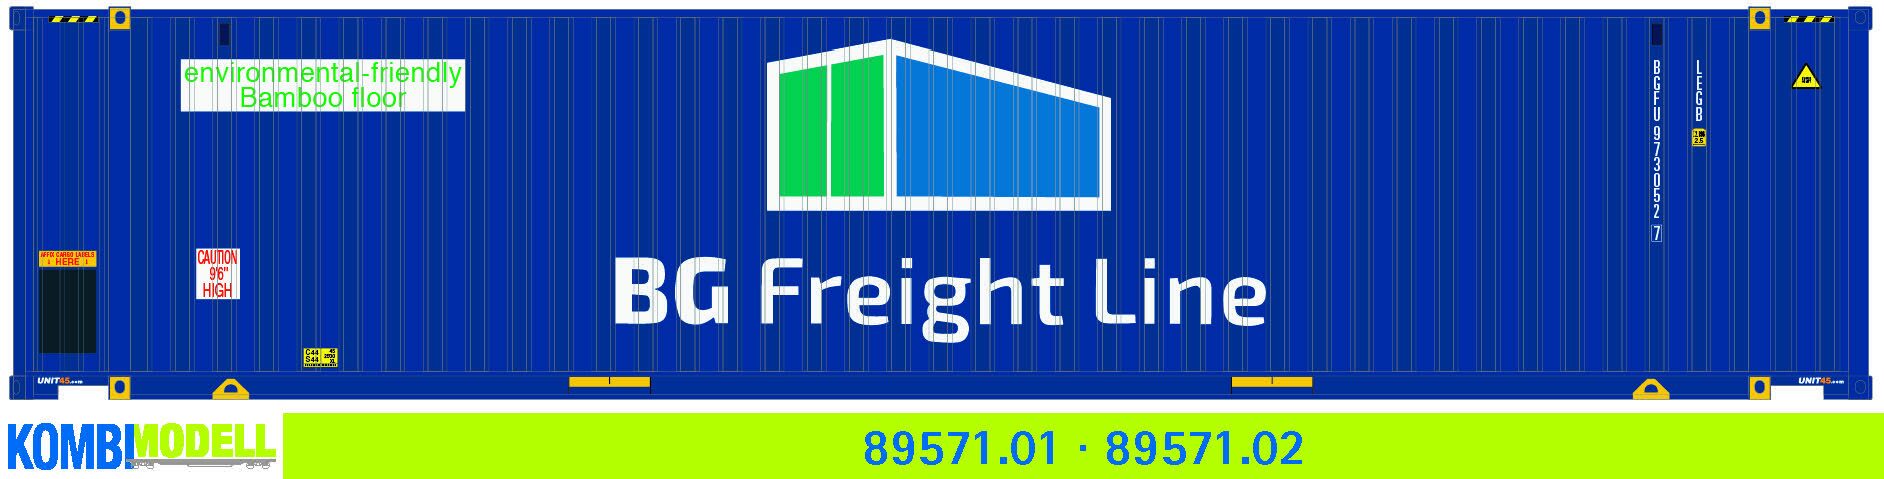 Kombimodell 89571.01 WB-A /Ct 45' (Euro) BG Freight Line"" (bamboo floor", Logo neu) #BGFU 973052"